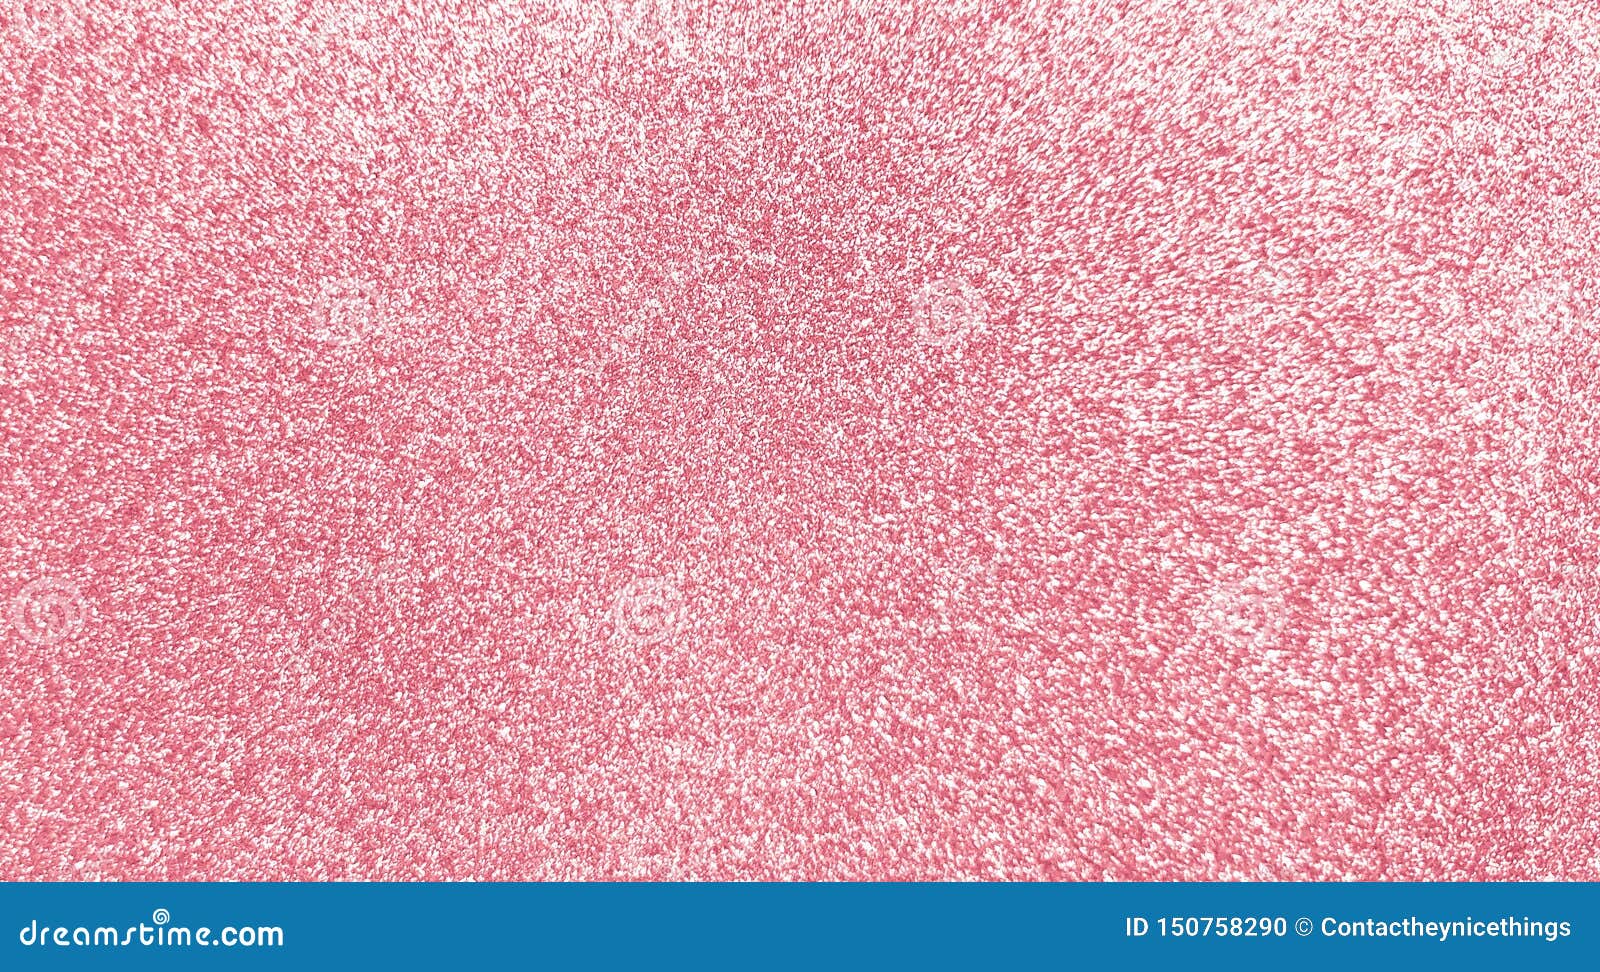 Sparkling Pink Glitter Sparkling Background Stock Photo - Image of